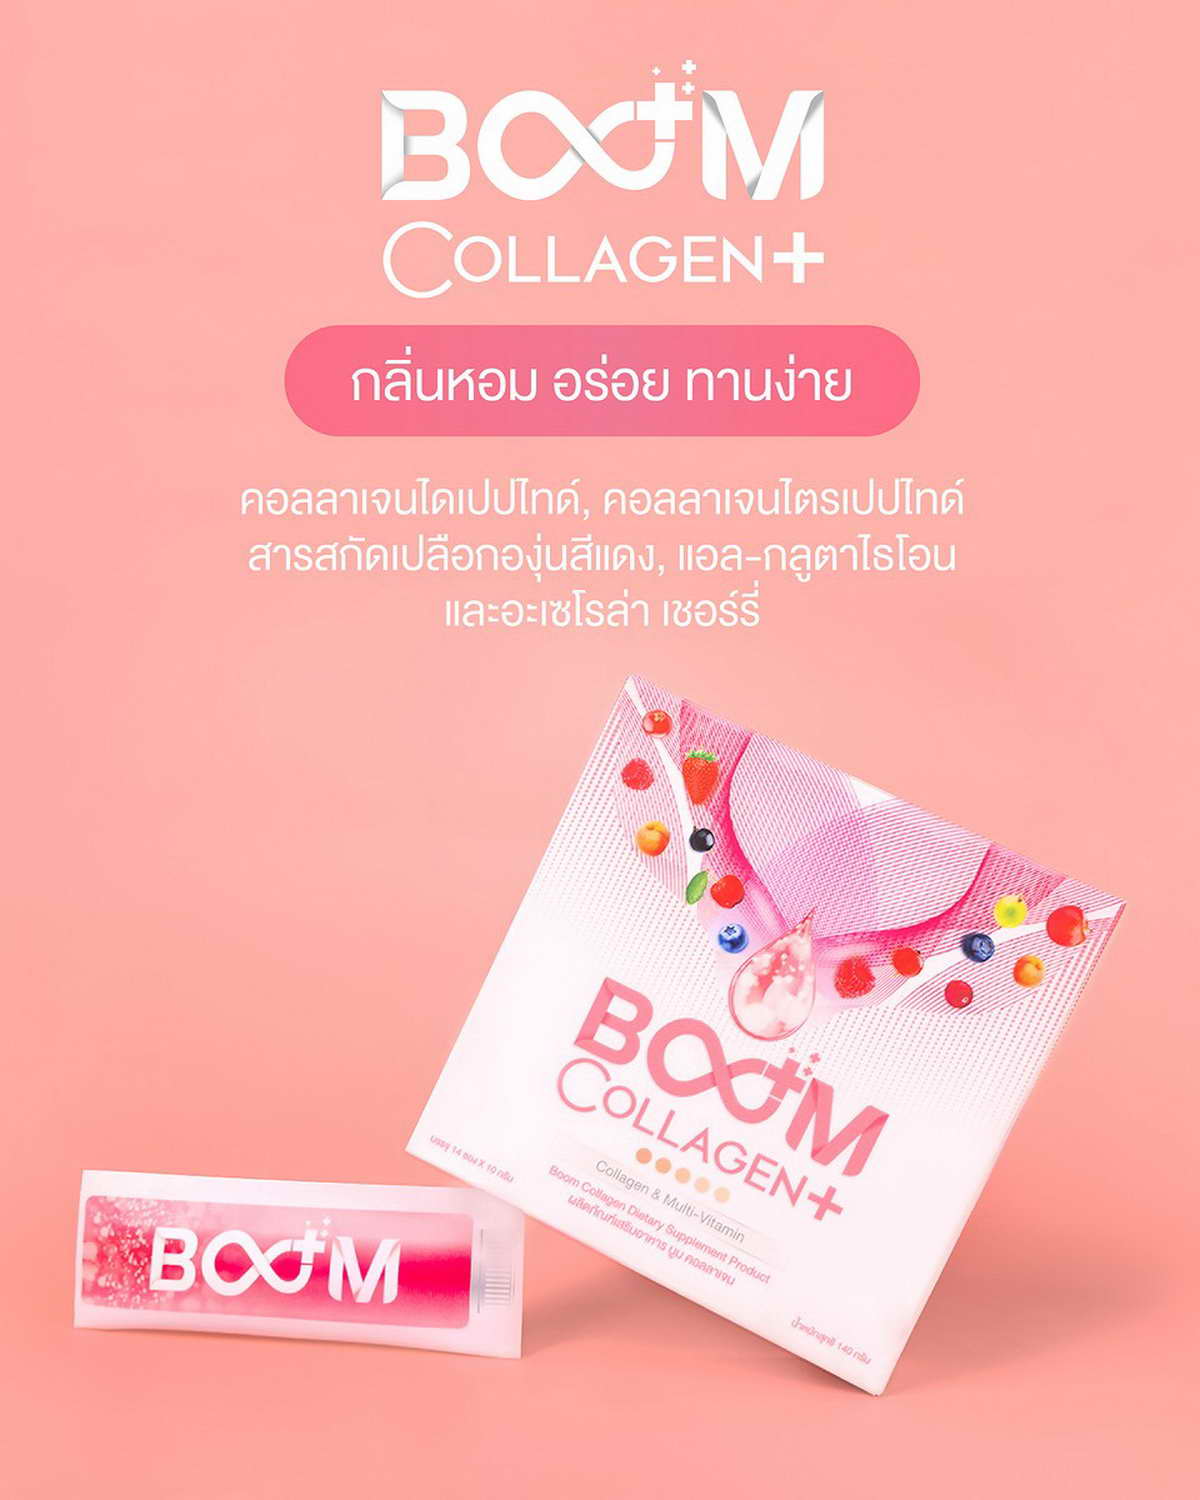 Boom Collagen Plus กลิ่นหอม อร่อย ทานง่าย